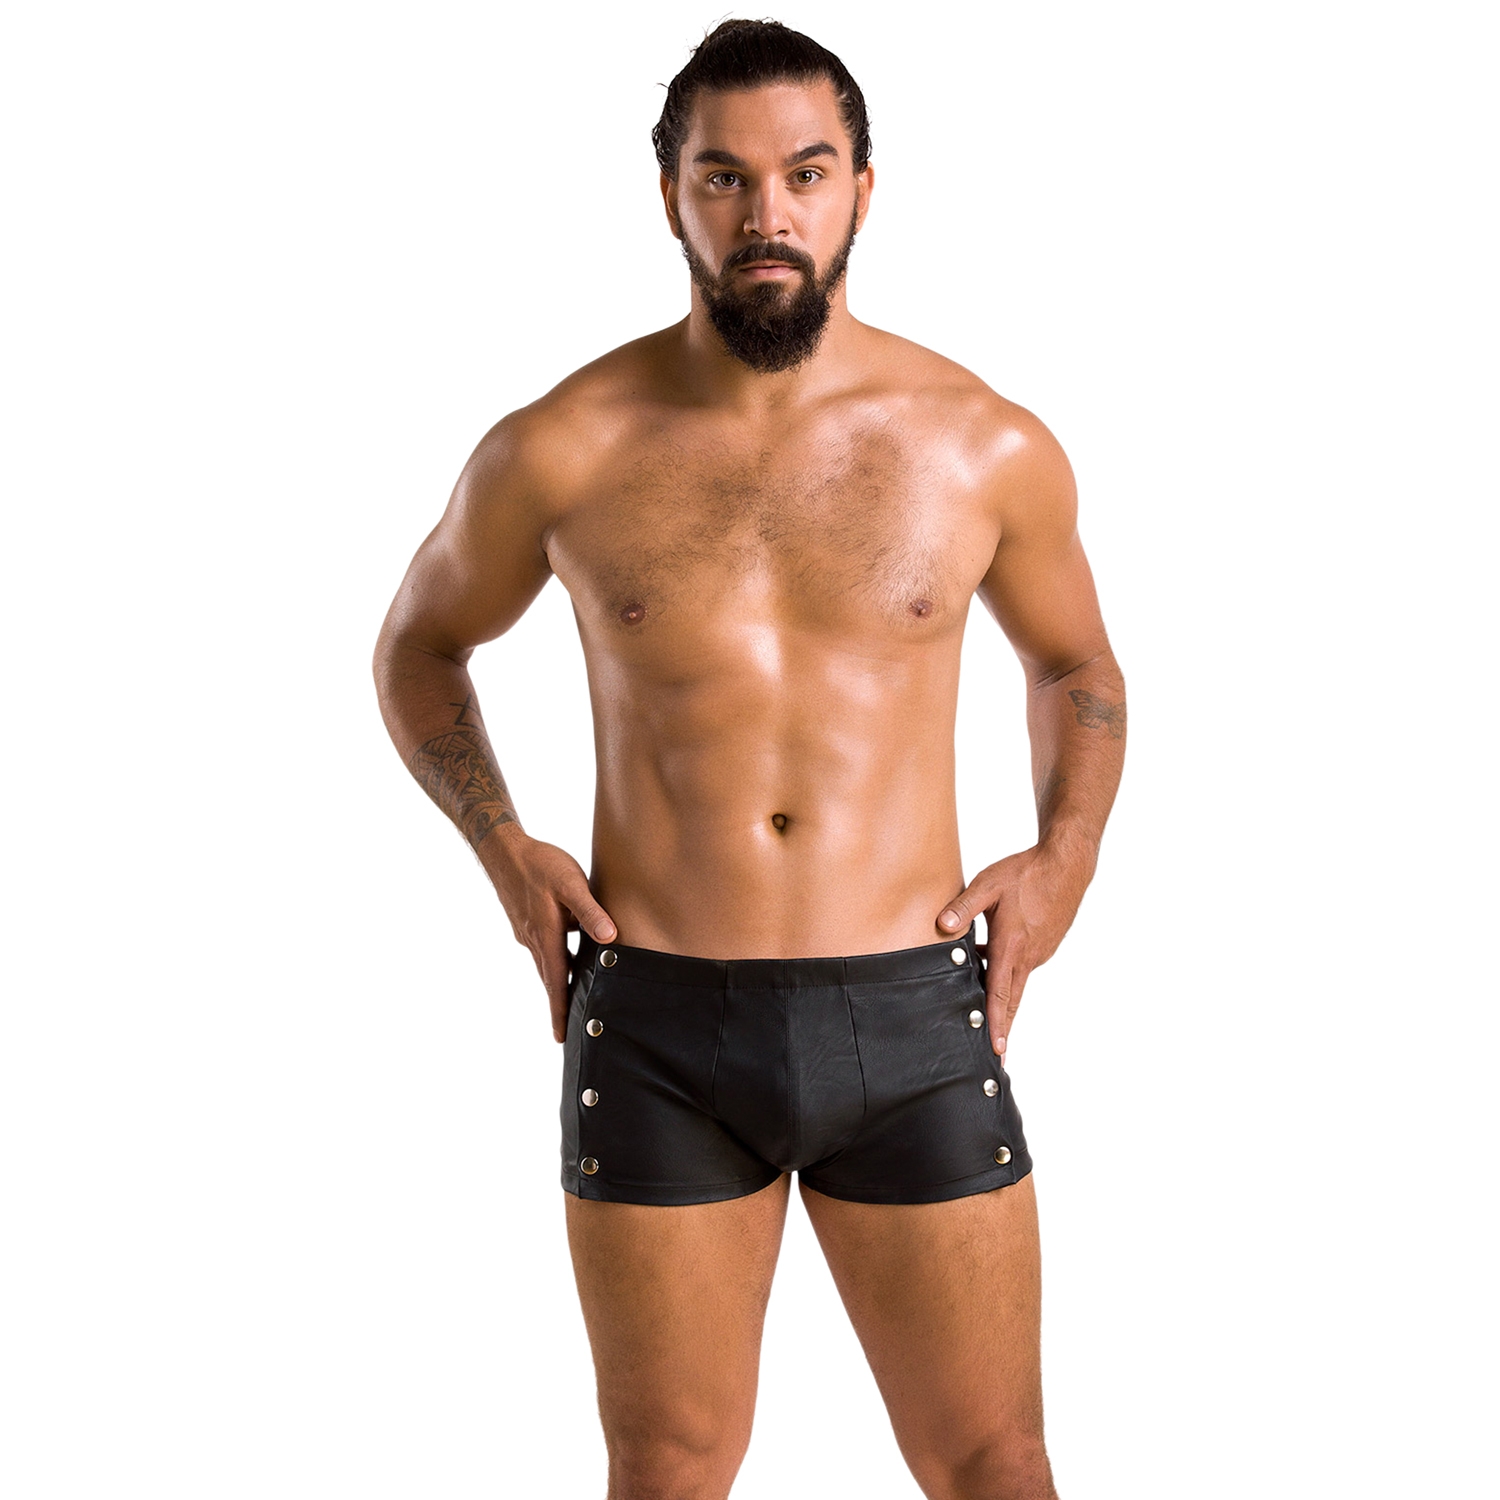 Passion David Boxershorts - Svart - S/M | Män//REA för Män//REA//Underkläder För Män//Passion//Boxer Shorts | Intimast